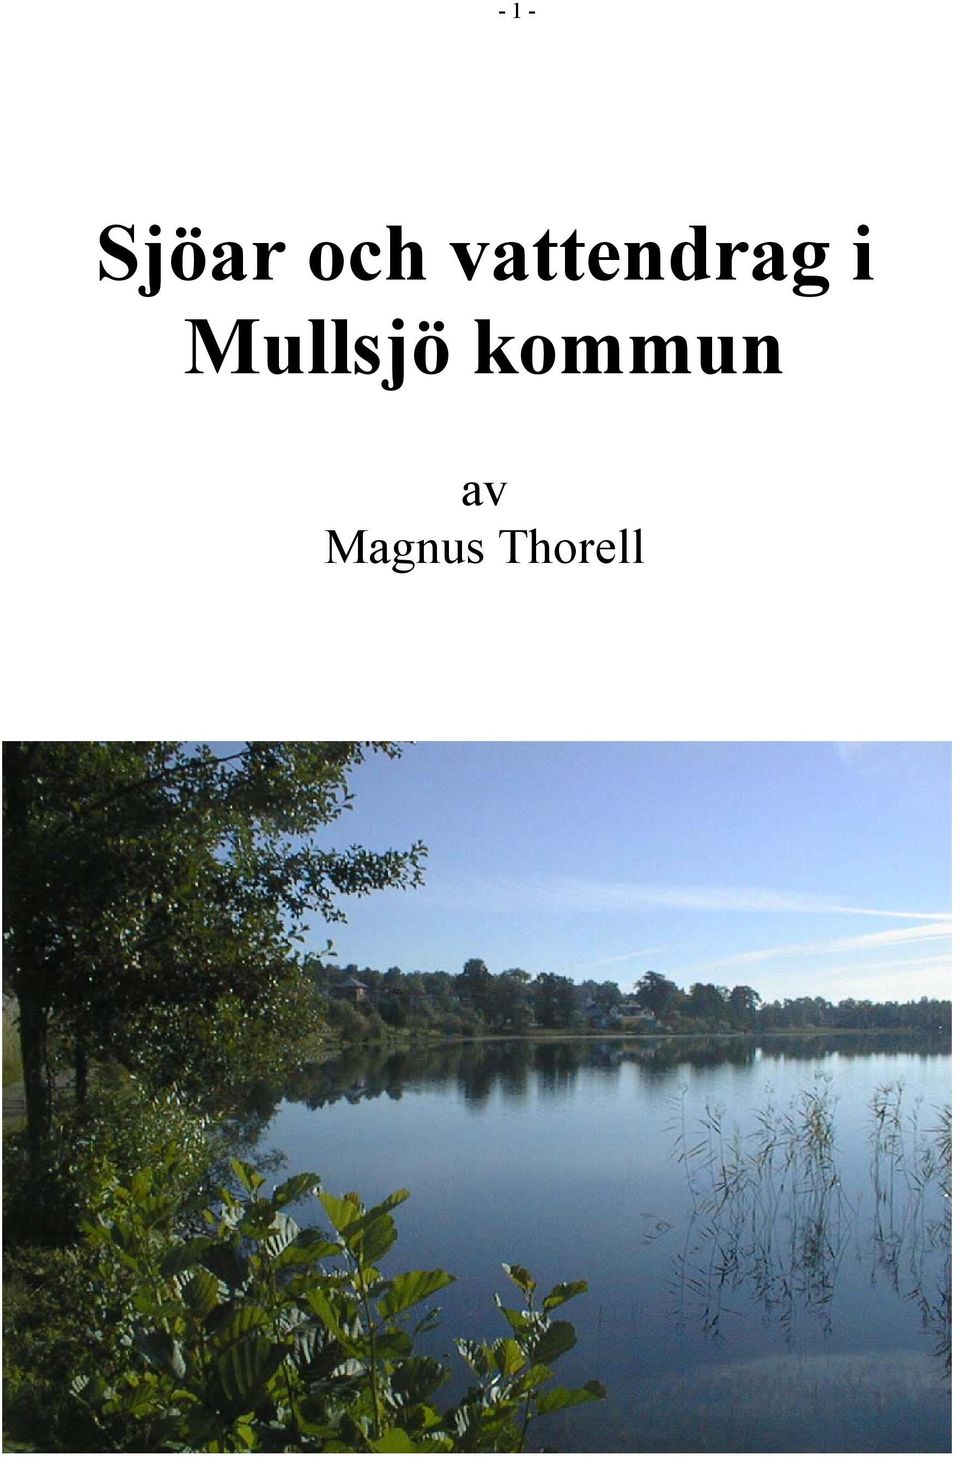 Mullsjö kommun